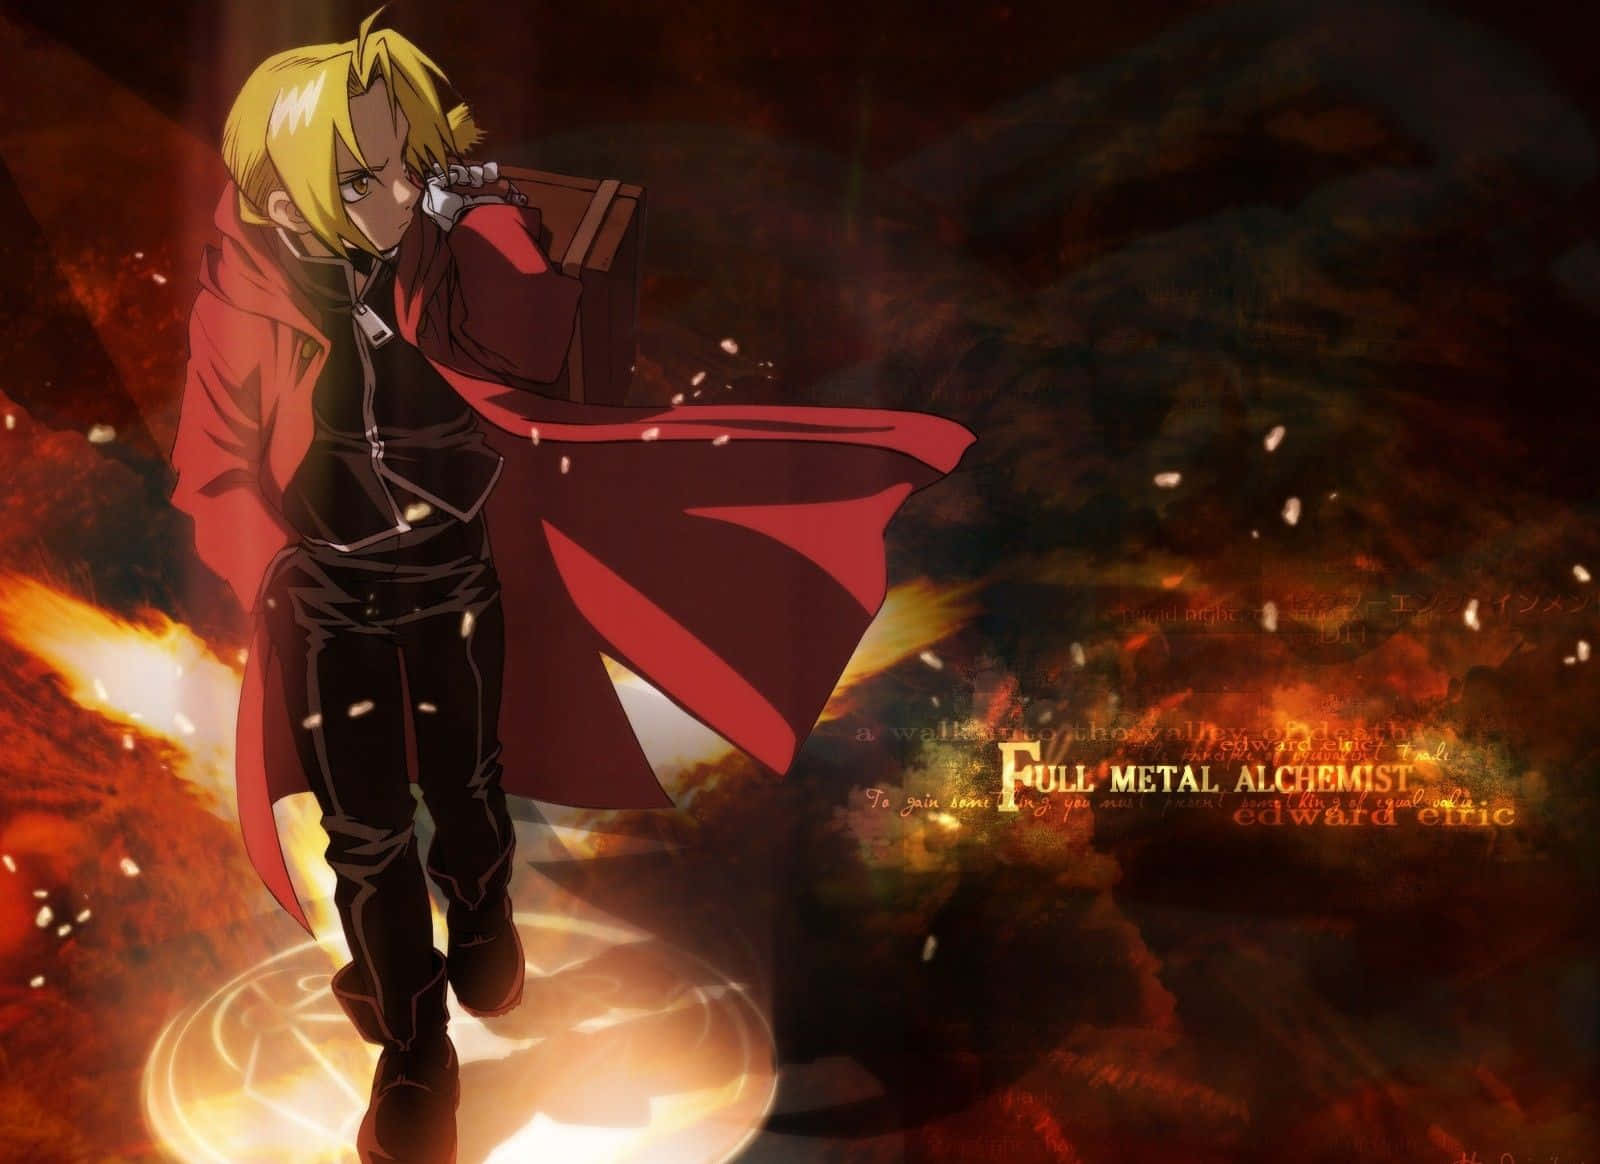 Edward Elric In Action - Fullmetal Alchemist Background